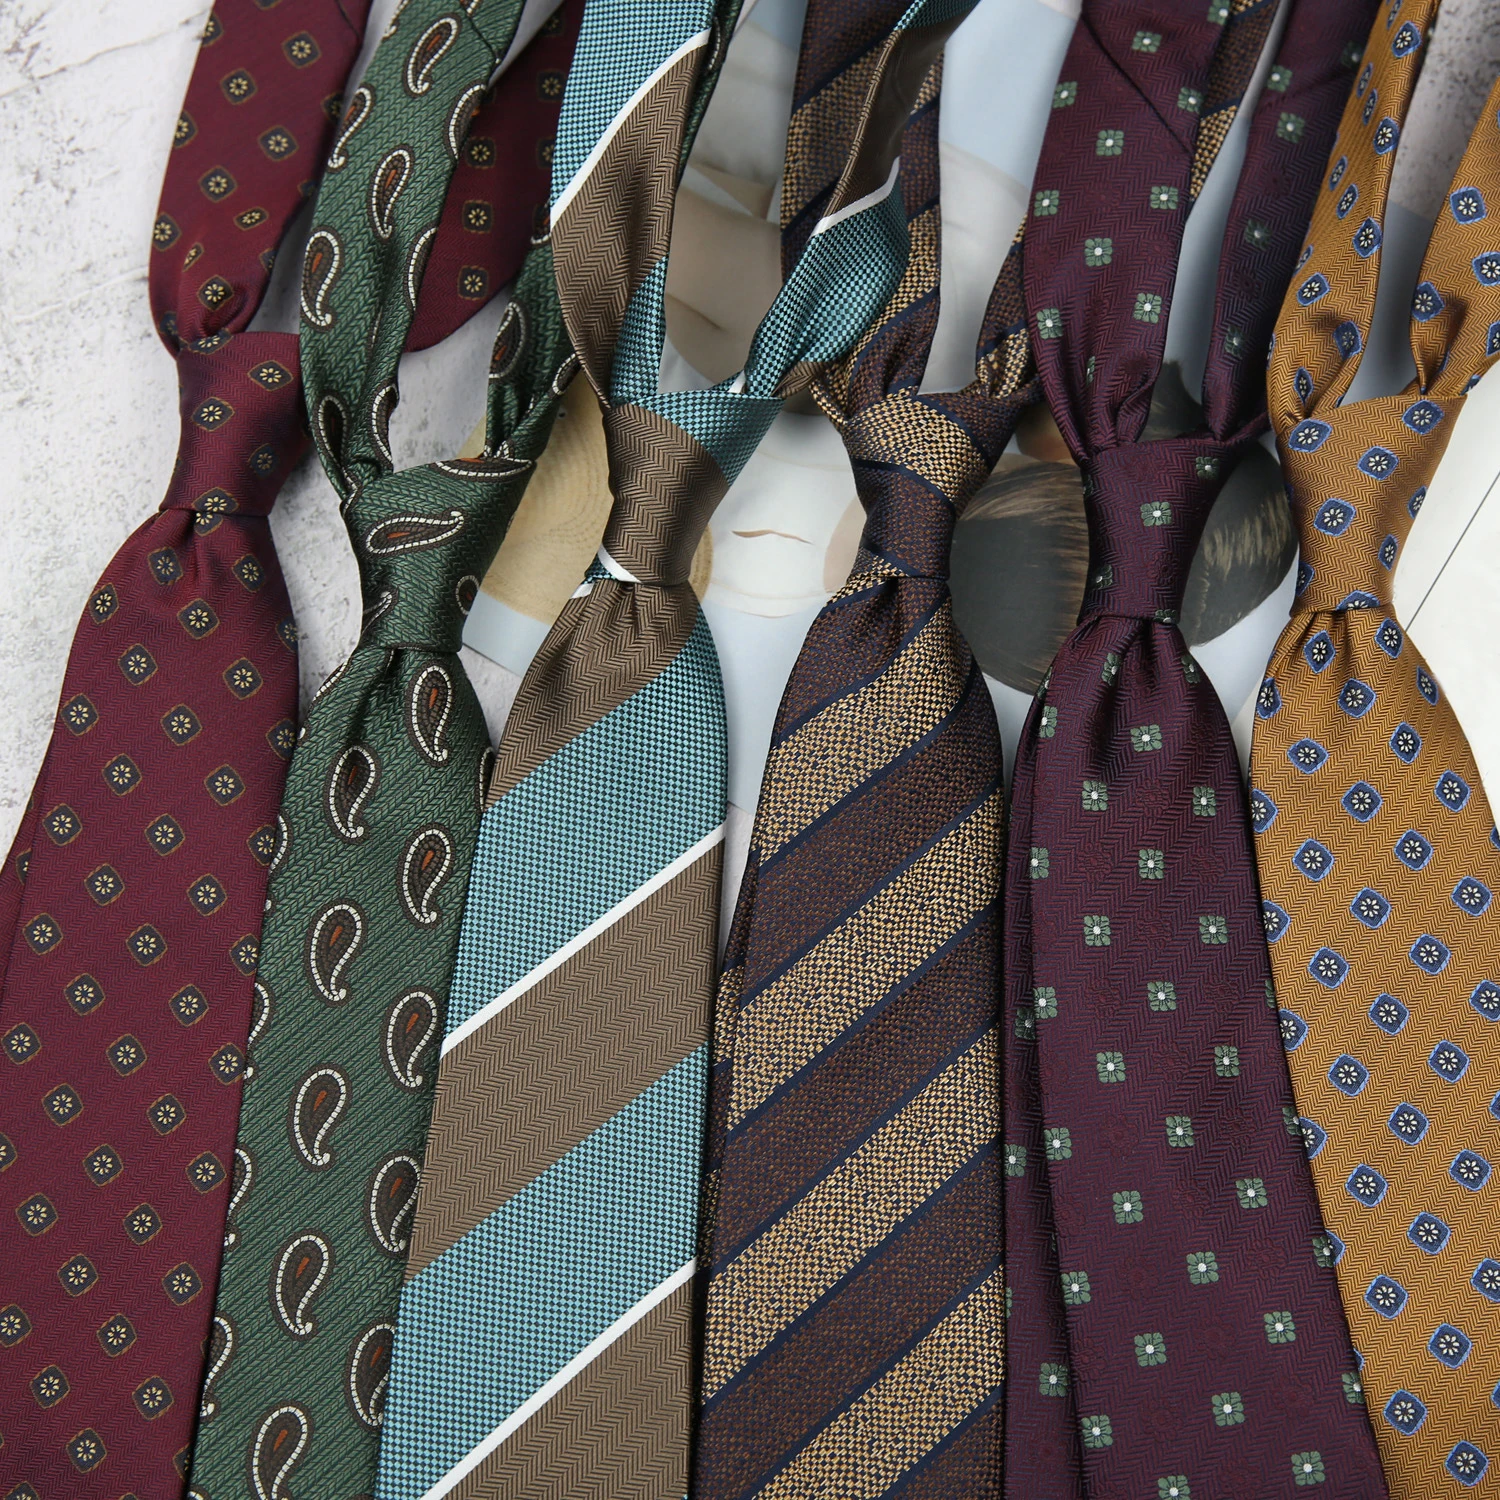 

Linabiway Fashion 8cm Width Floral Printed Neck Ties for Men Vintage Pattern Suits Tie Gravatas Blue Mens Neckties Gifts